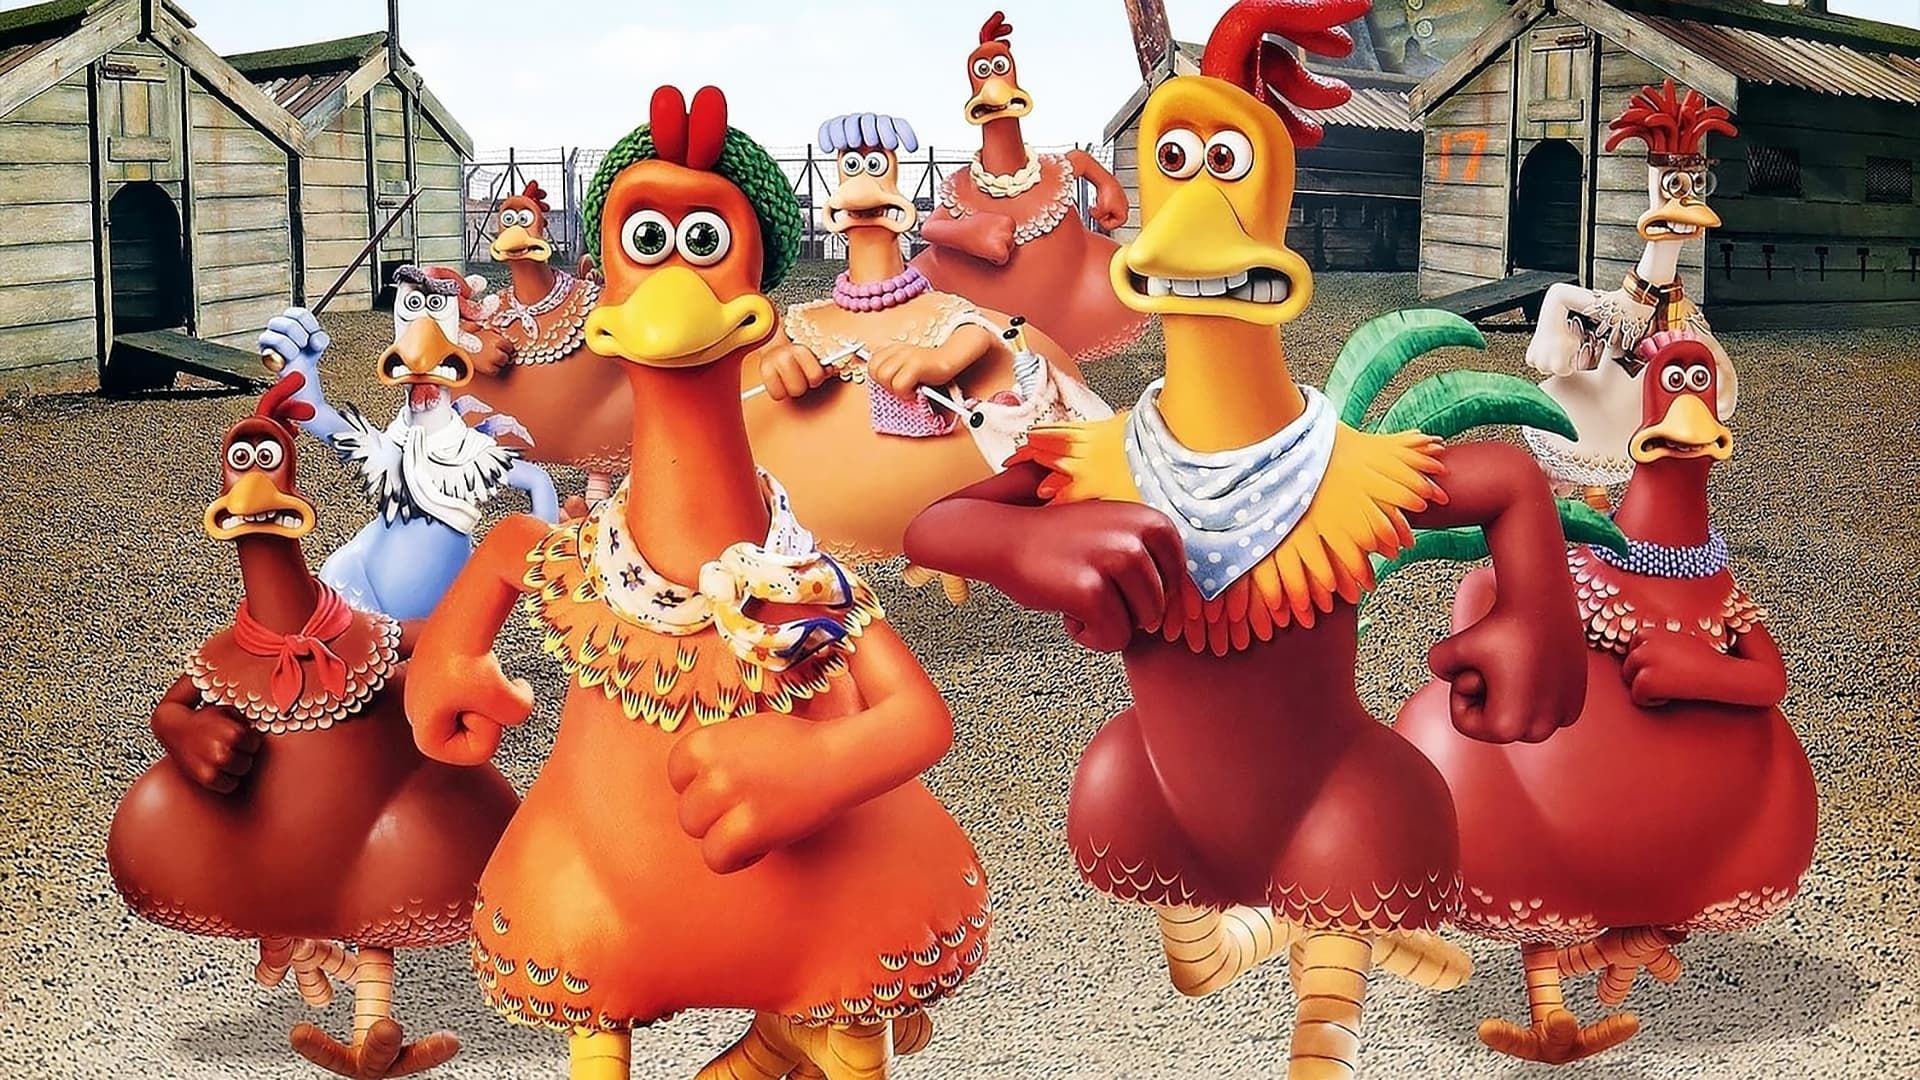 دانلود انیمیشن Chicken Run 2000